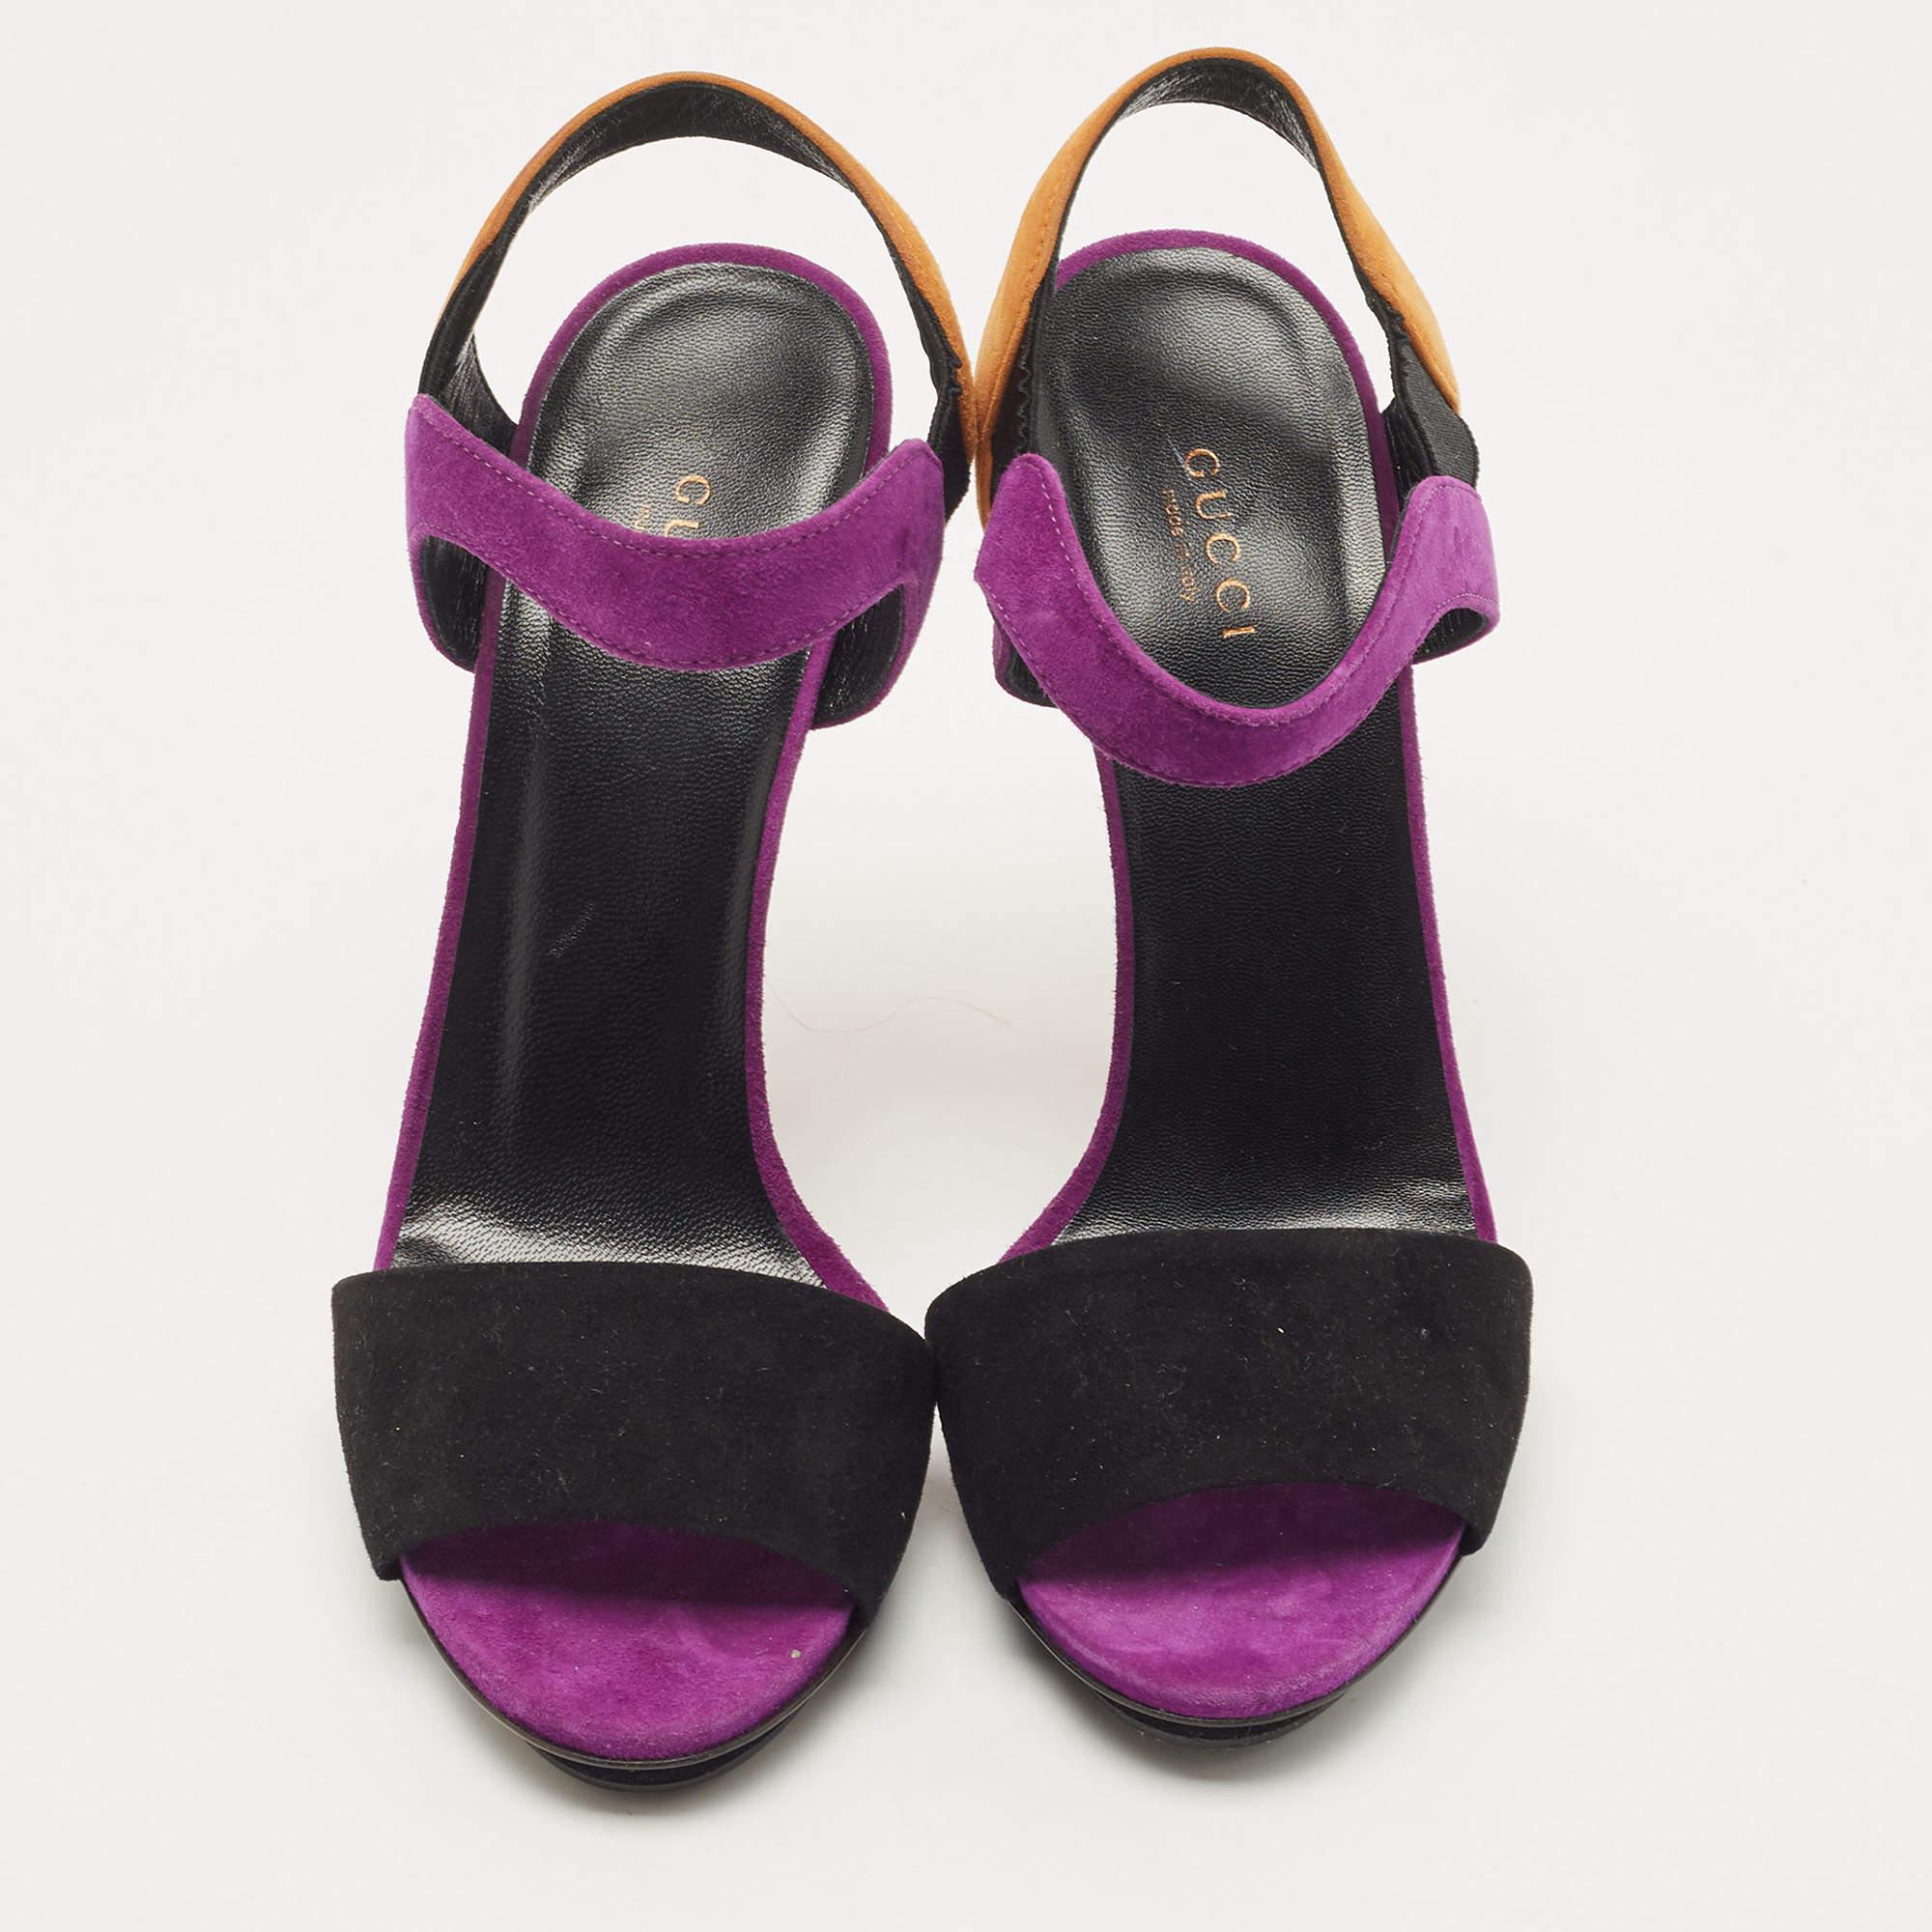 Gucci Multicolor Suede Mirrored Ankle Strap Pump Size 39 For Sale 1